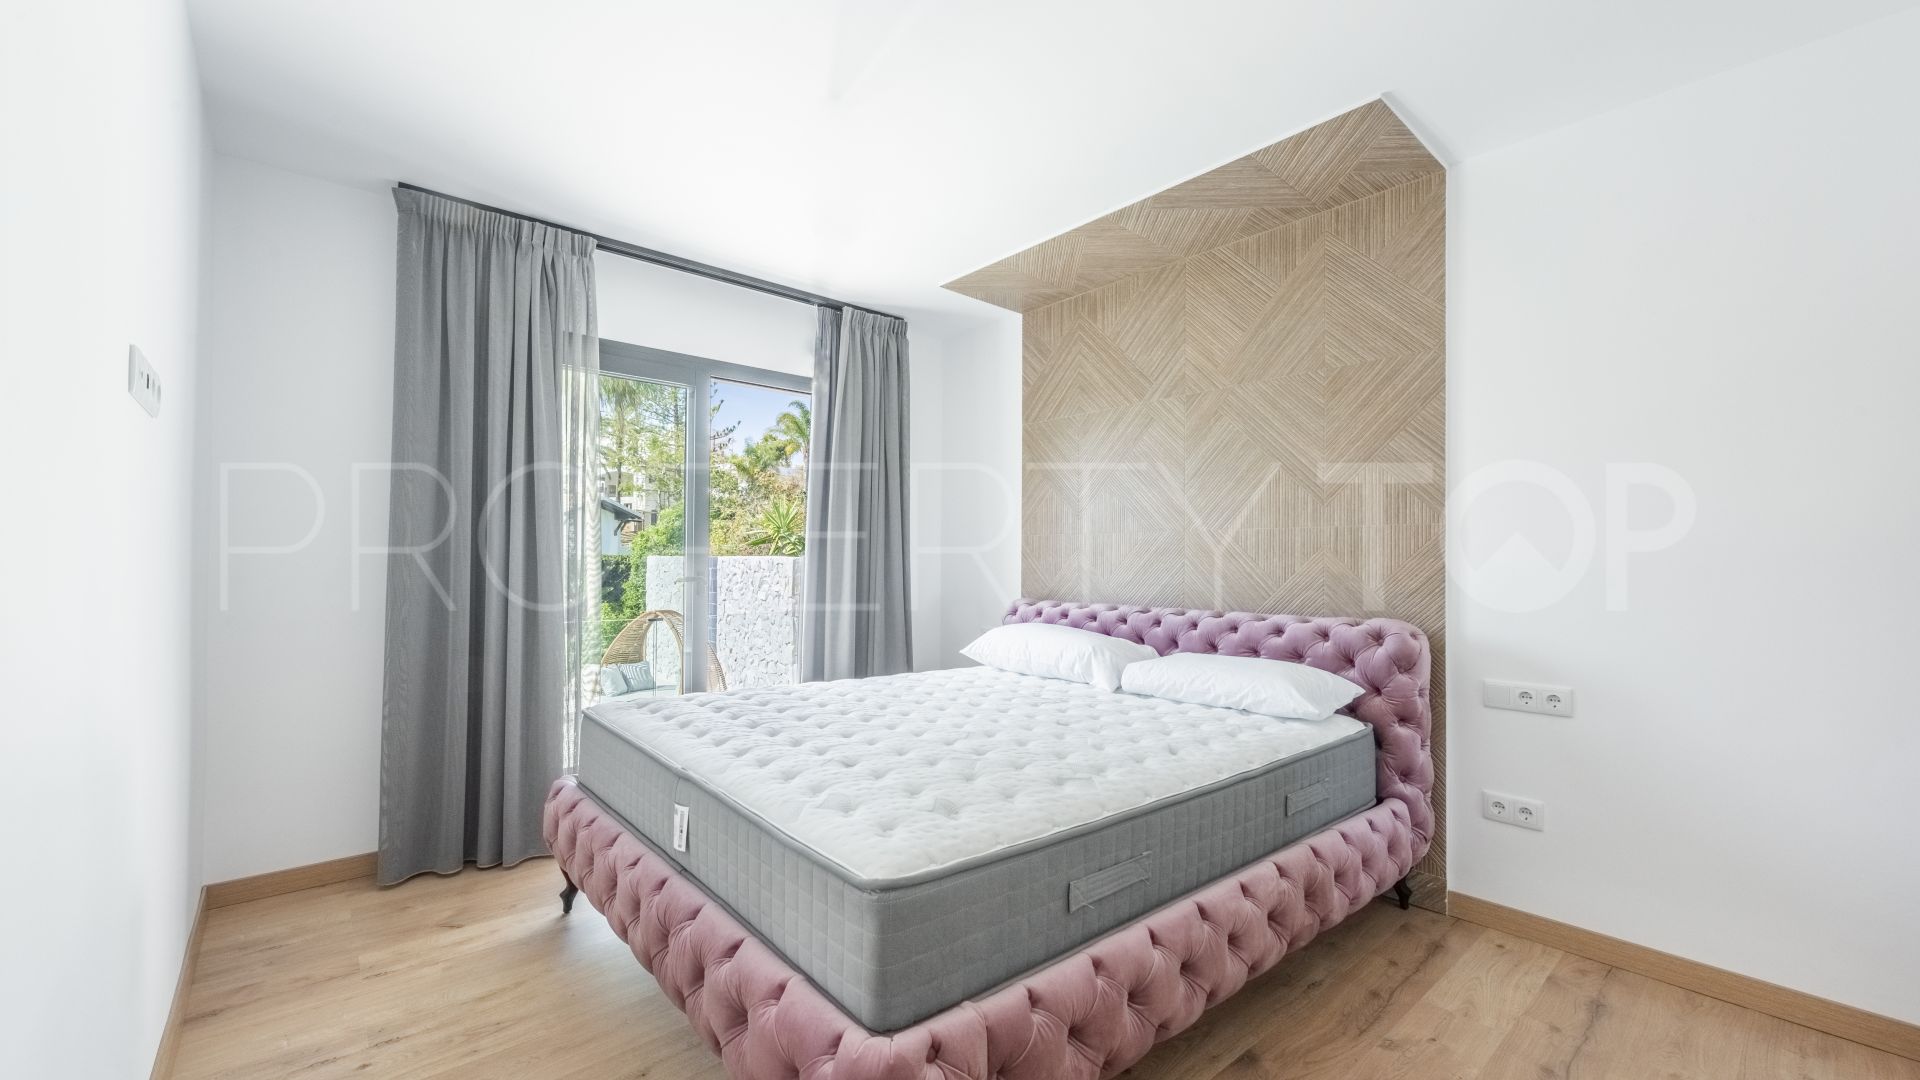 4 bedrooms Marbella East villa for sale